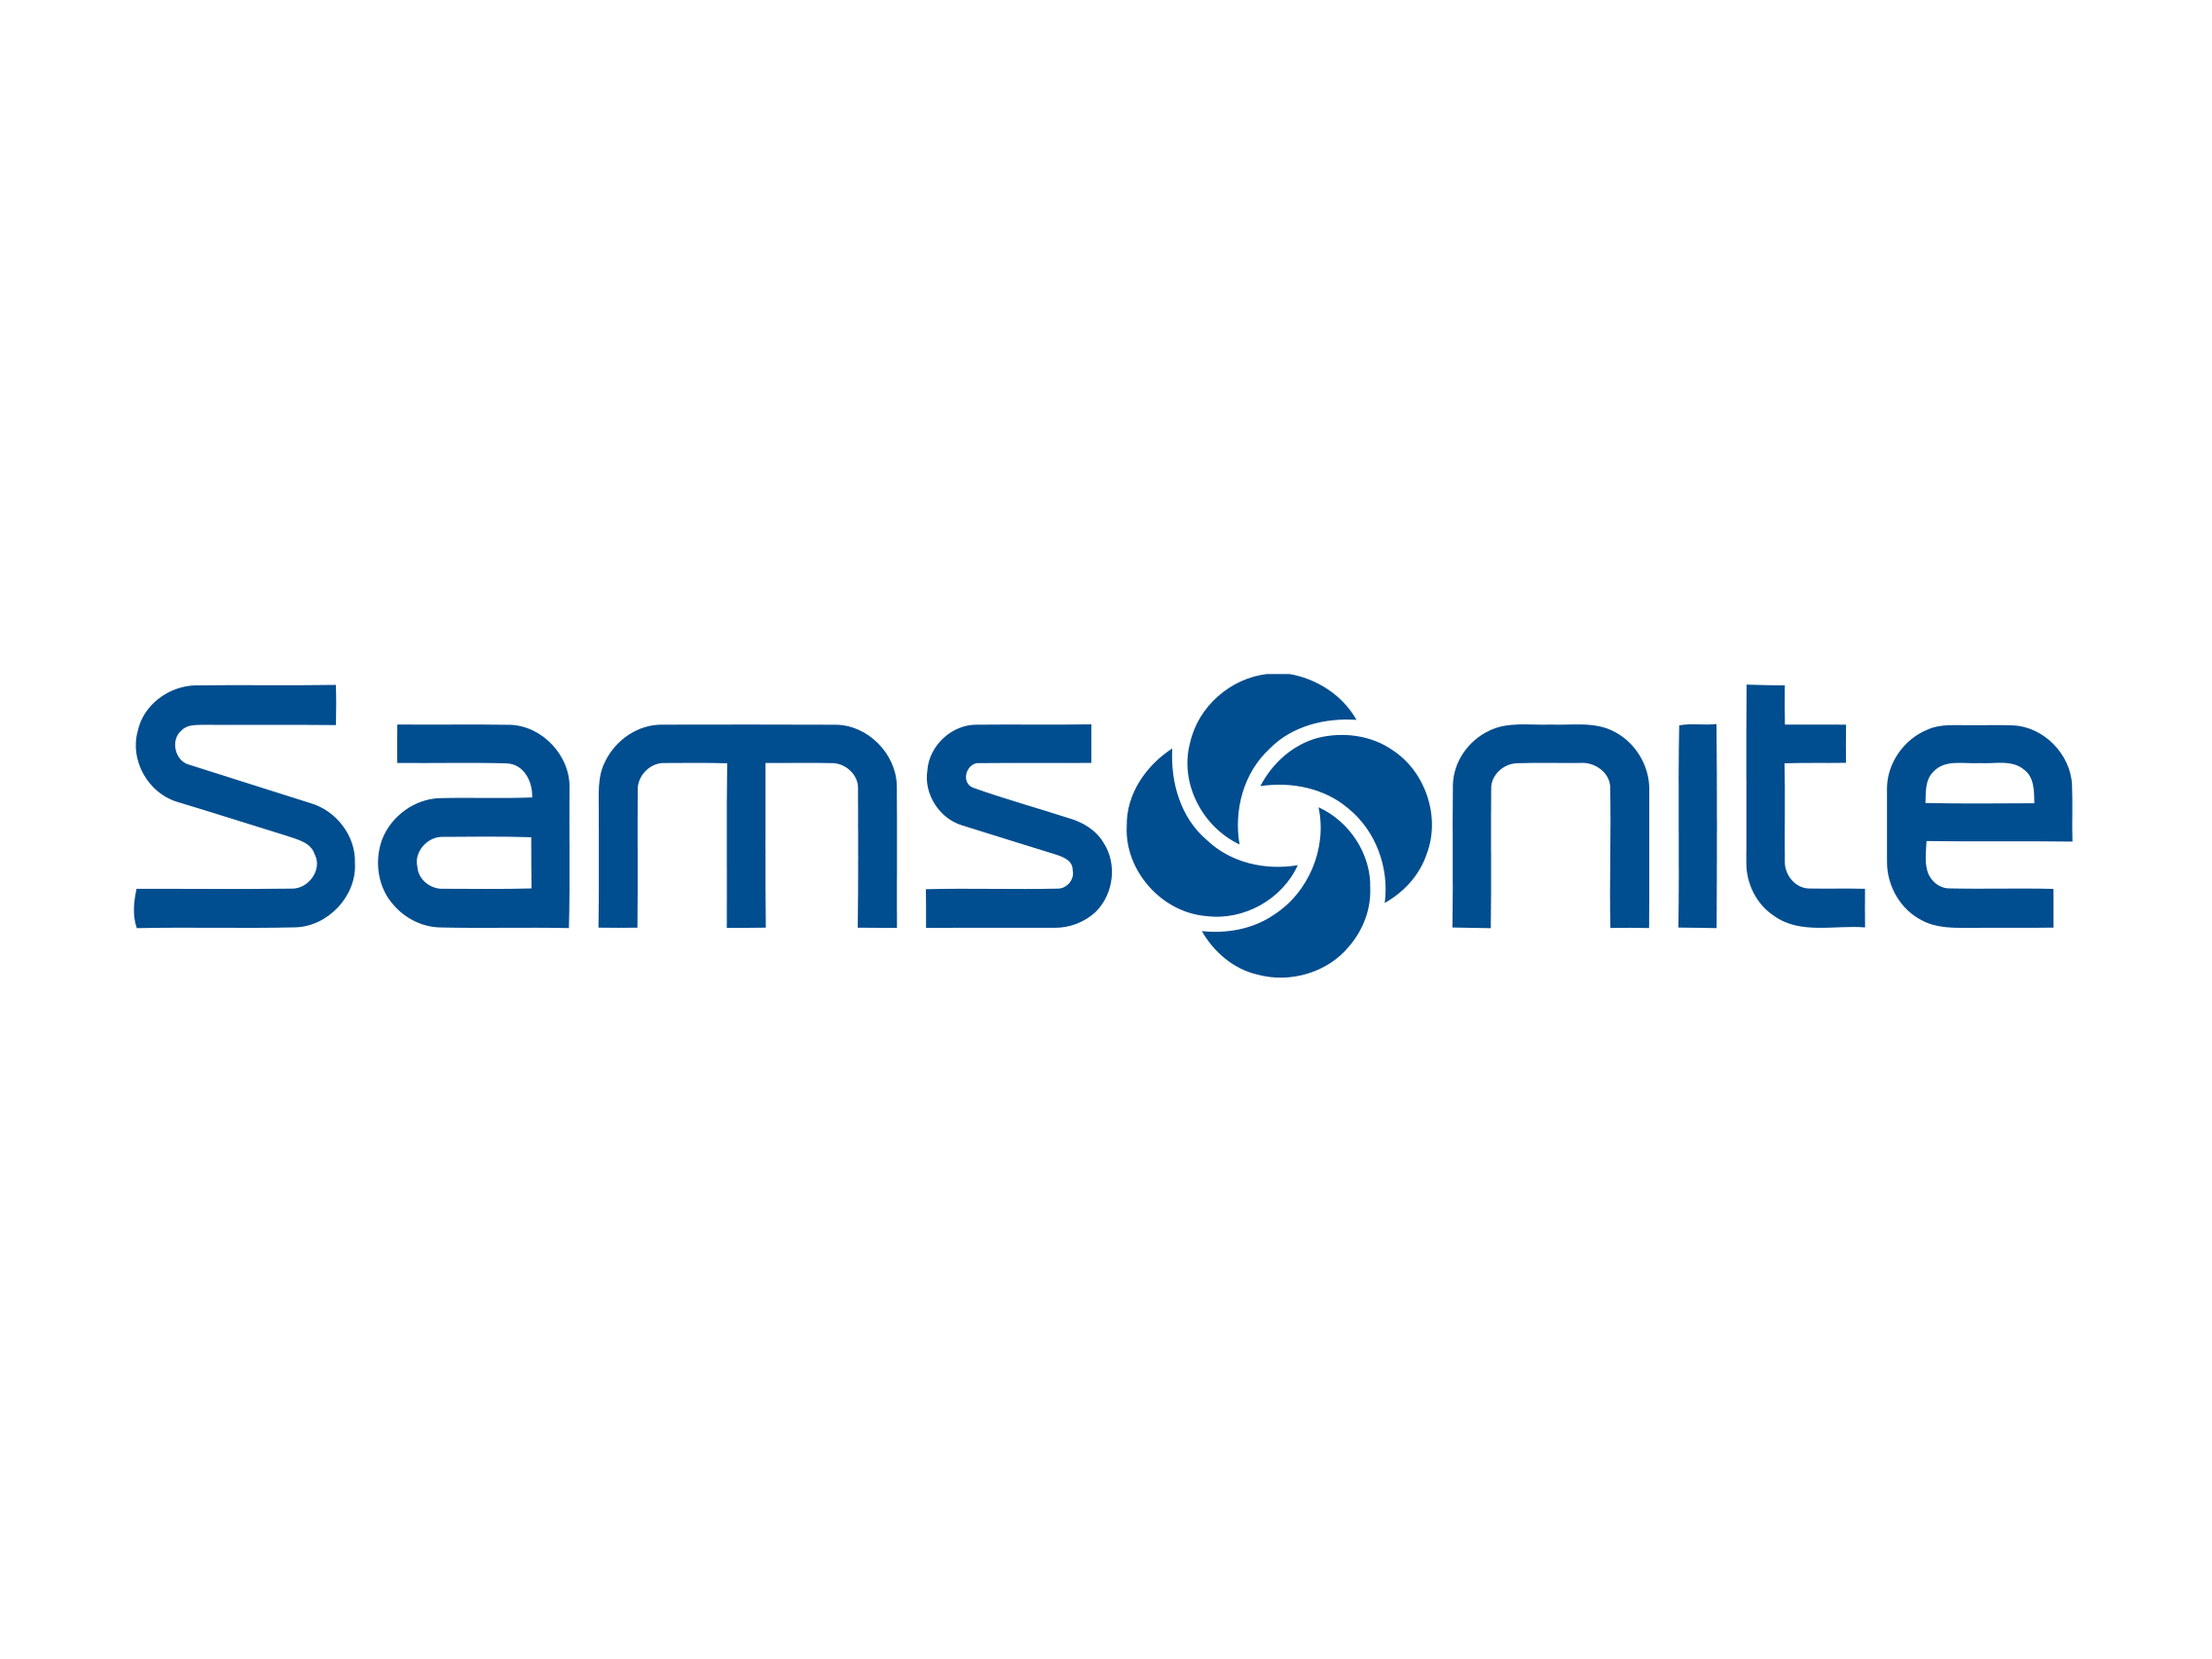 Samsonite логотип